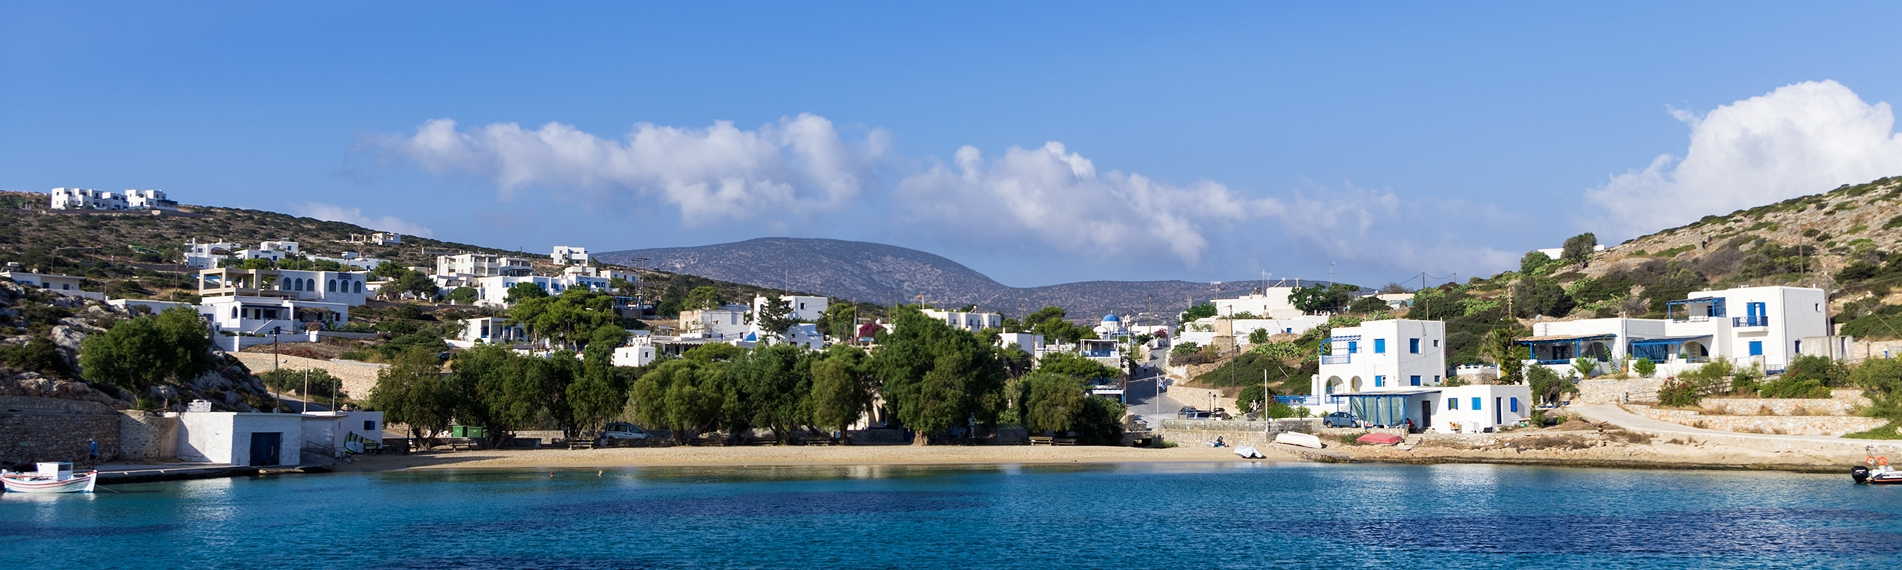 Houses overlooking the beach in Iraklia, Greece